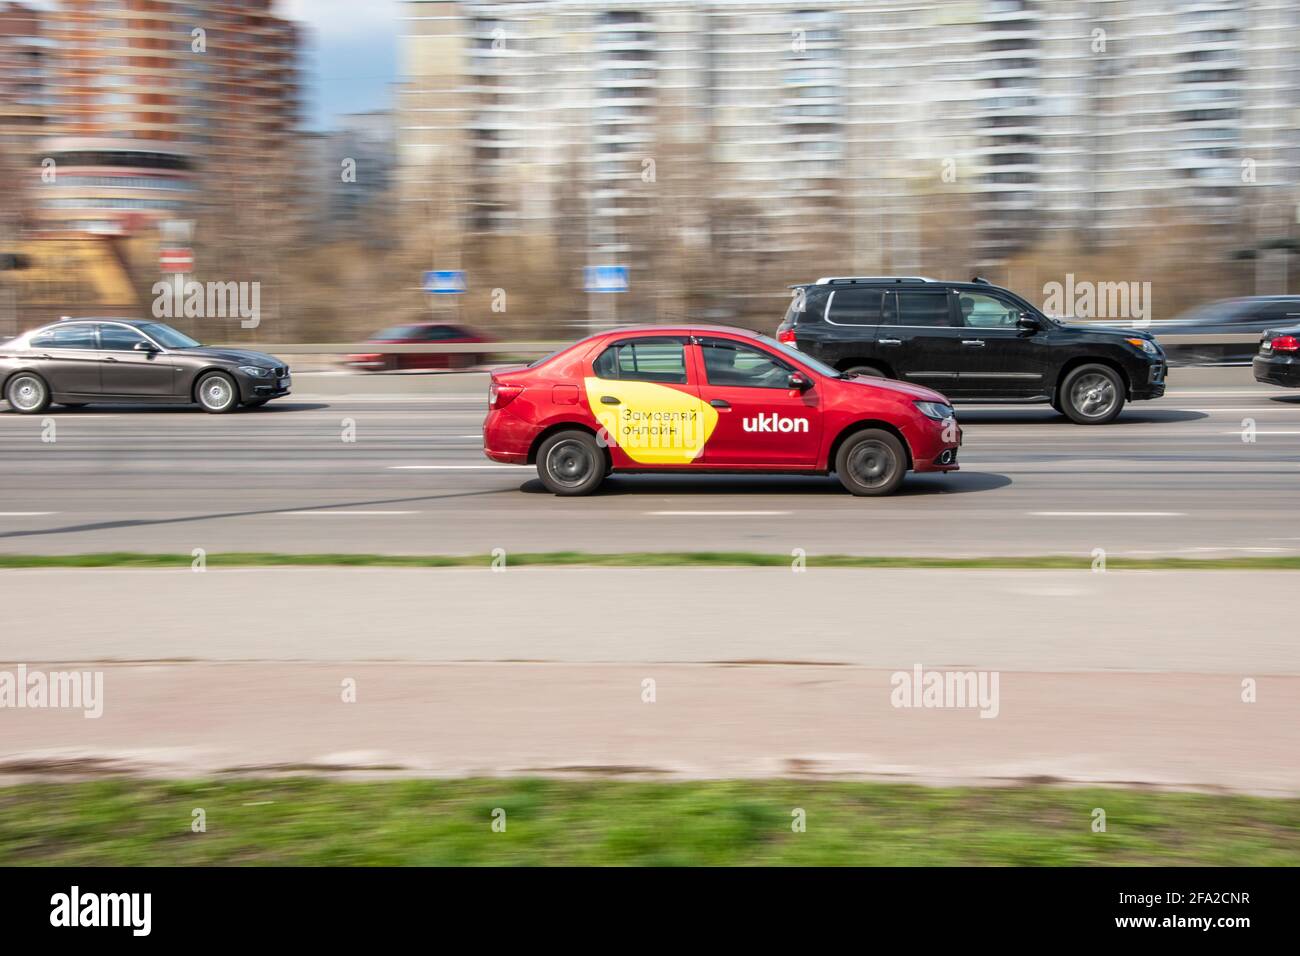 Ukraine, Kyiv - 6 April 2021: Taxi Uklon Red Renault Logan car moving on the street. Editorial Stock Photo